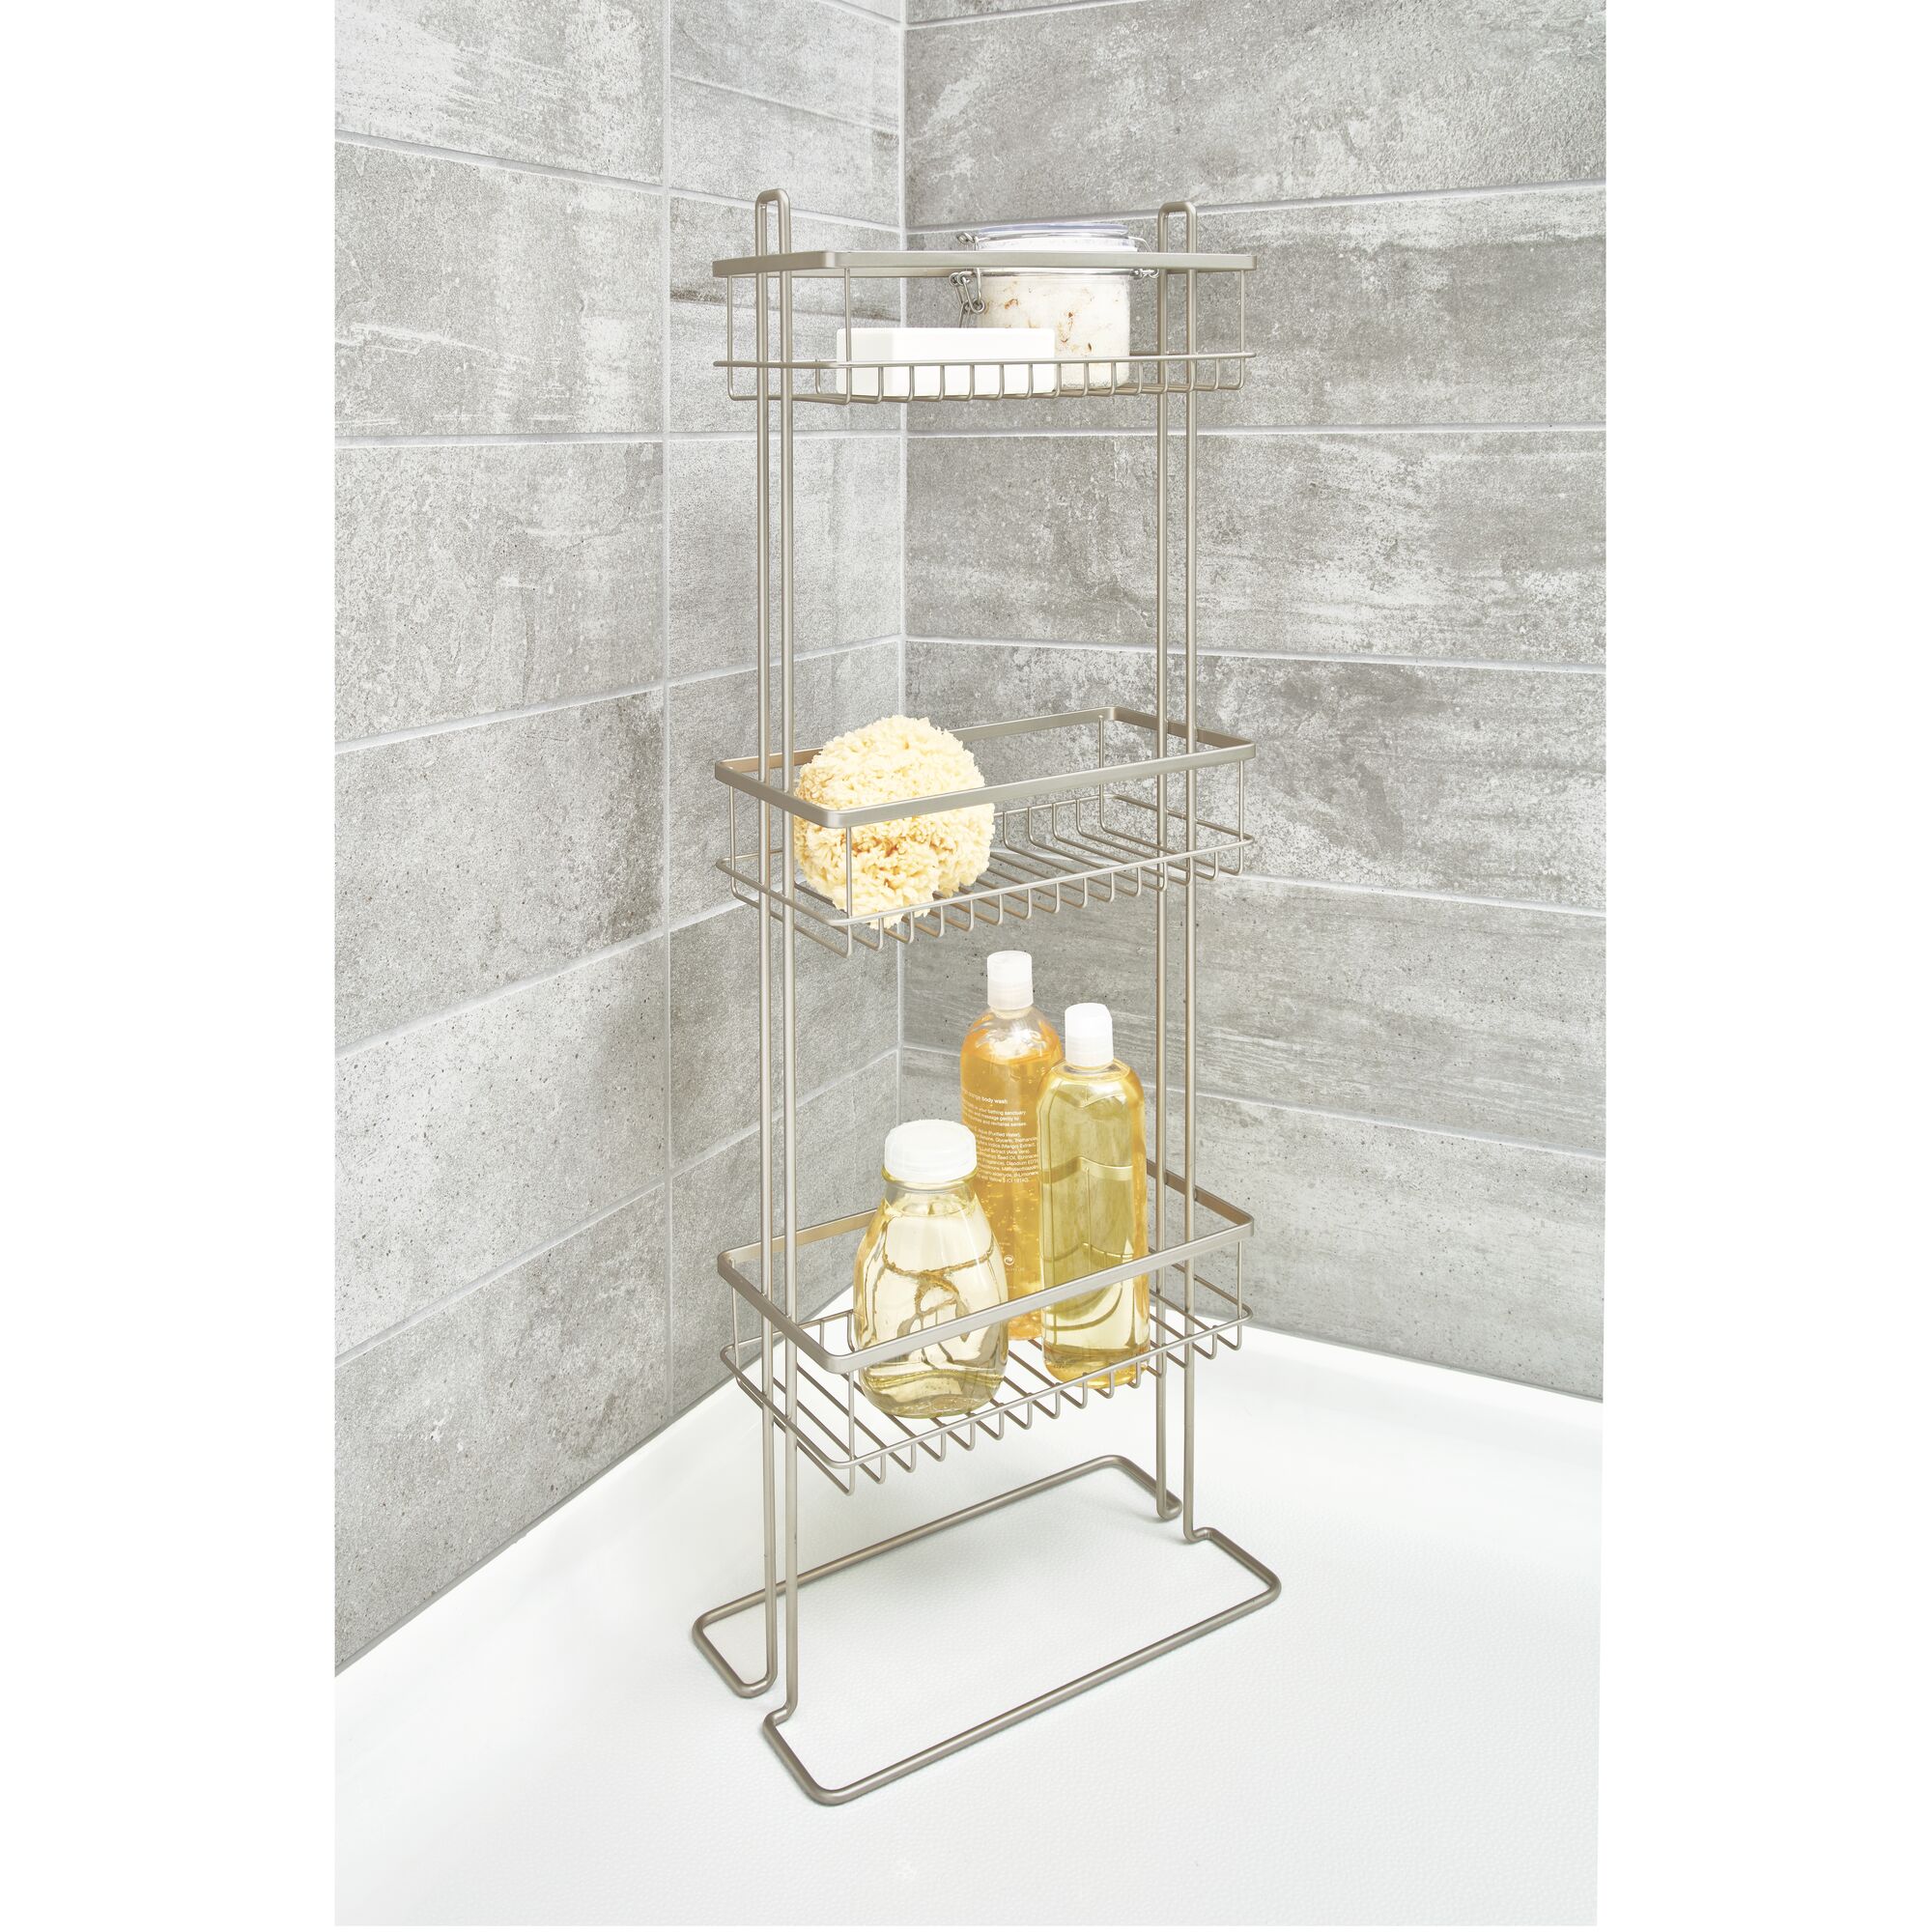 iDesign York Metal Wire Corner Standing Shower Caddy 3-Tier Bath Shelf  Baskets for Towels, Soap